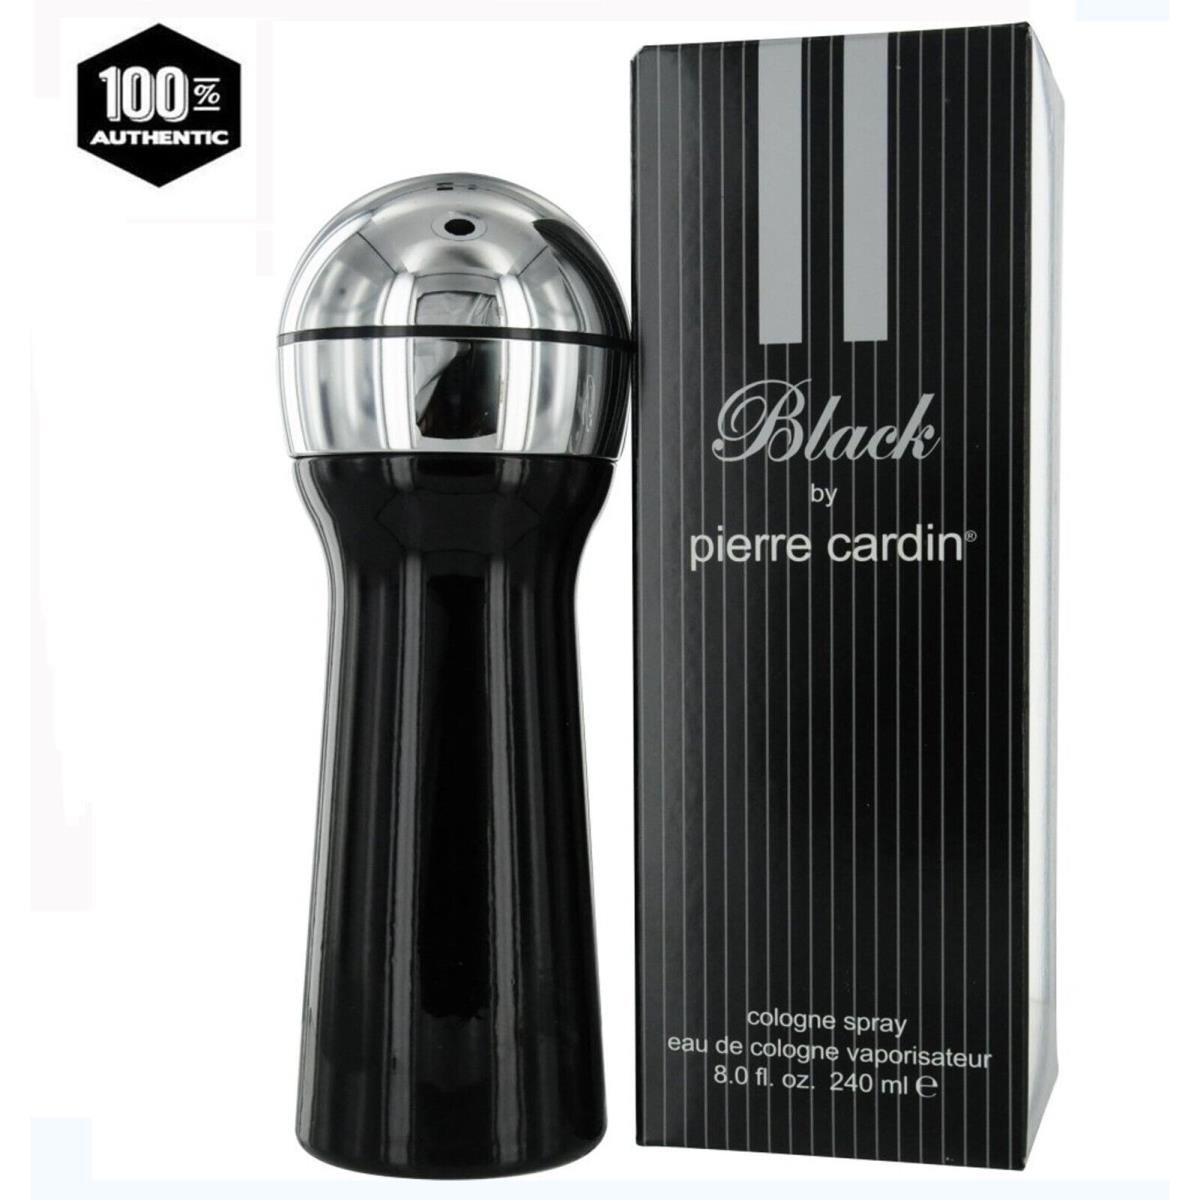 Pierre Cardin Black by Pierre Cardin 8.0 oz / 240 ml Edc Cologne For Men